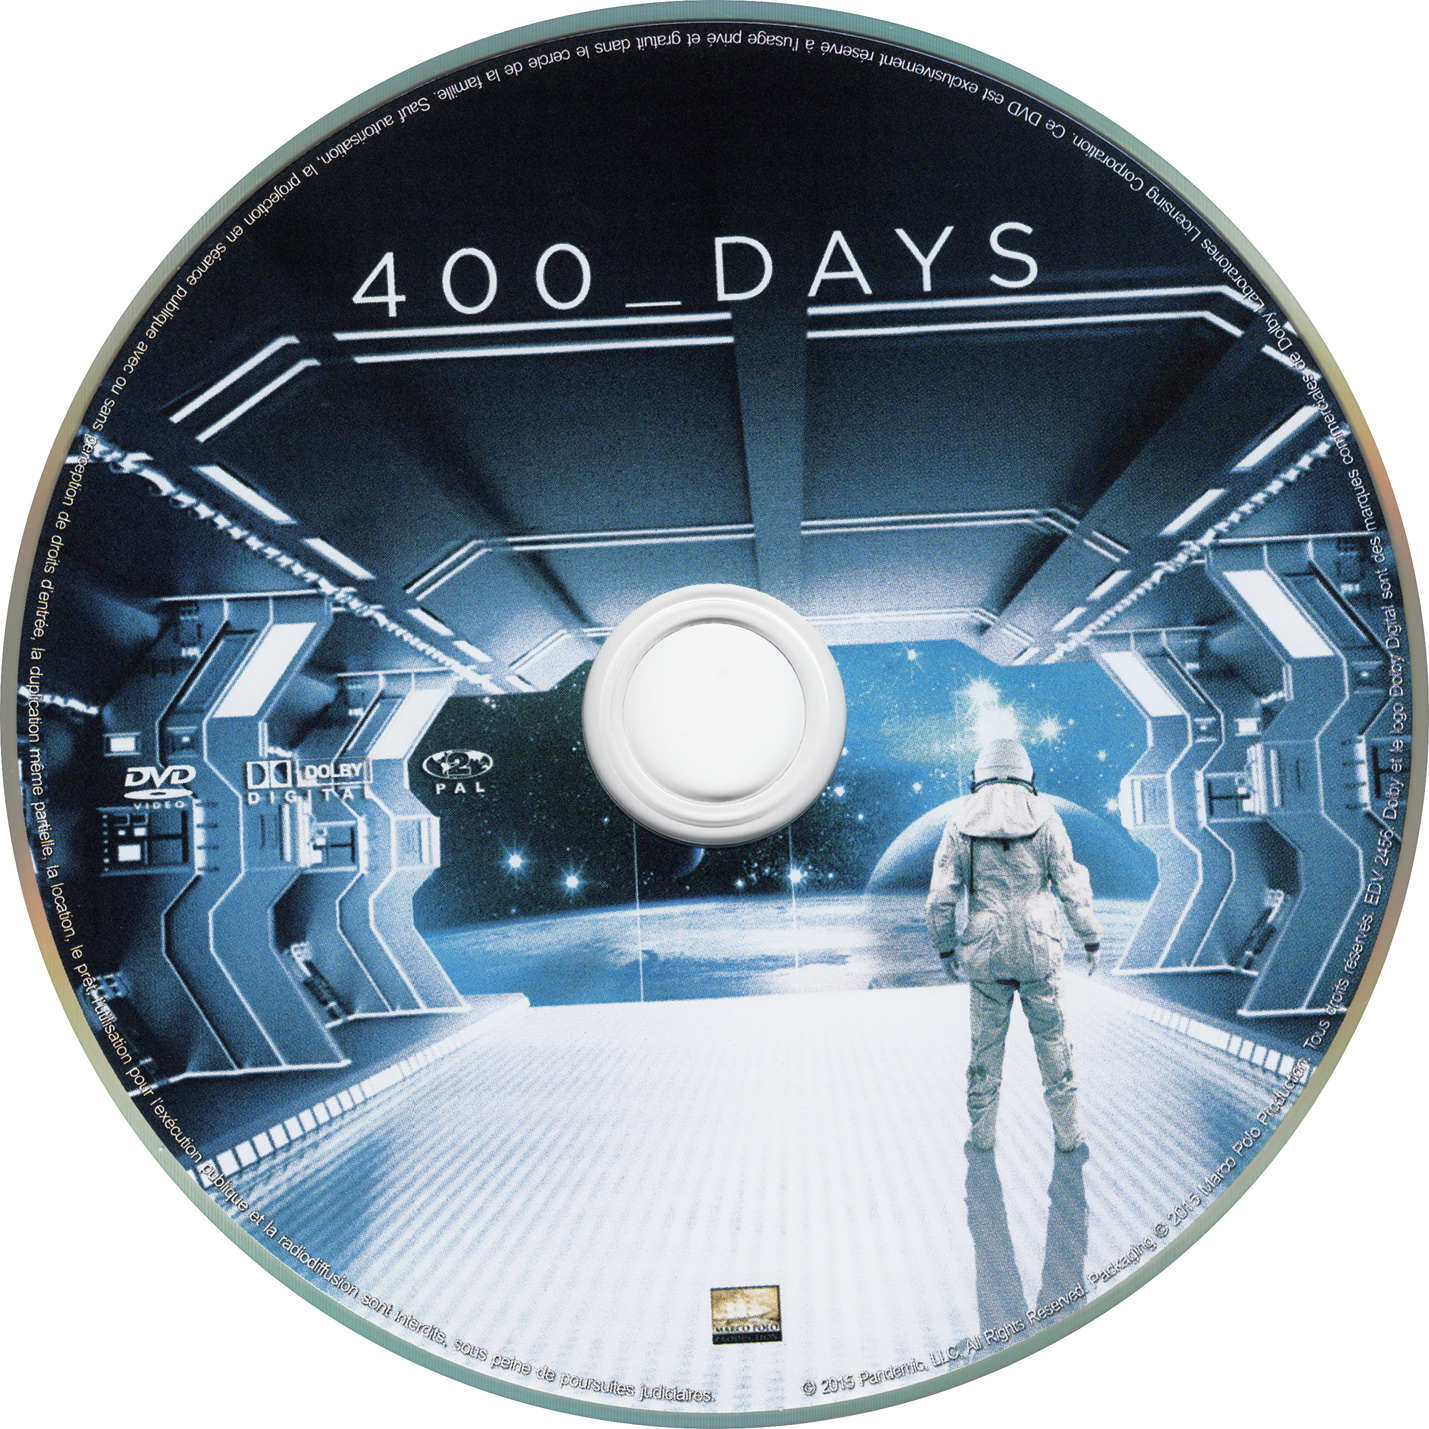 400 days